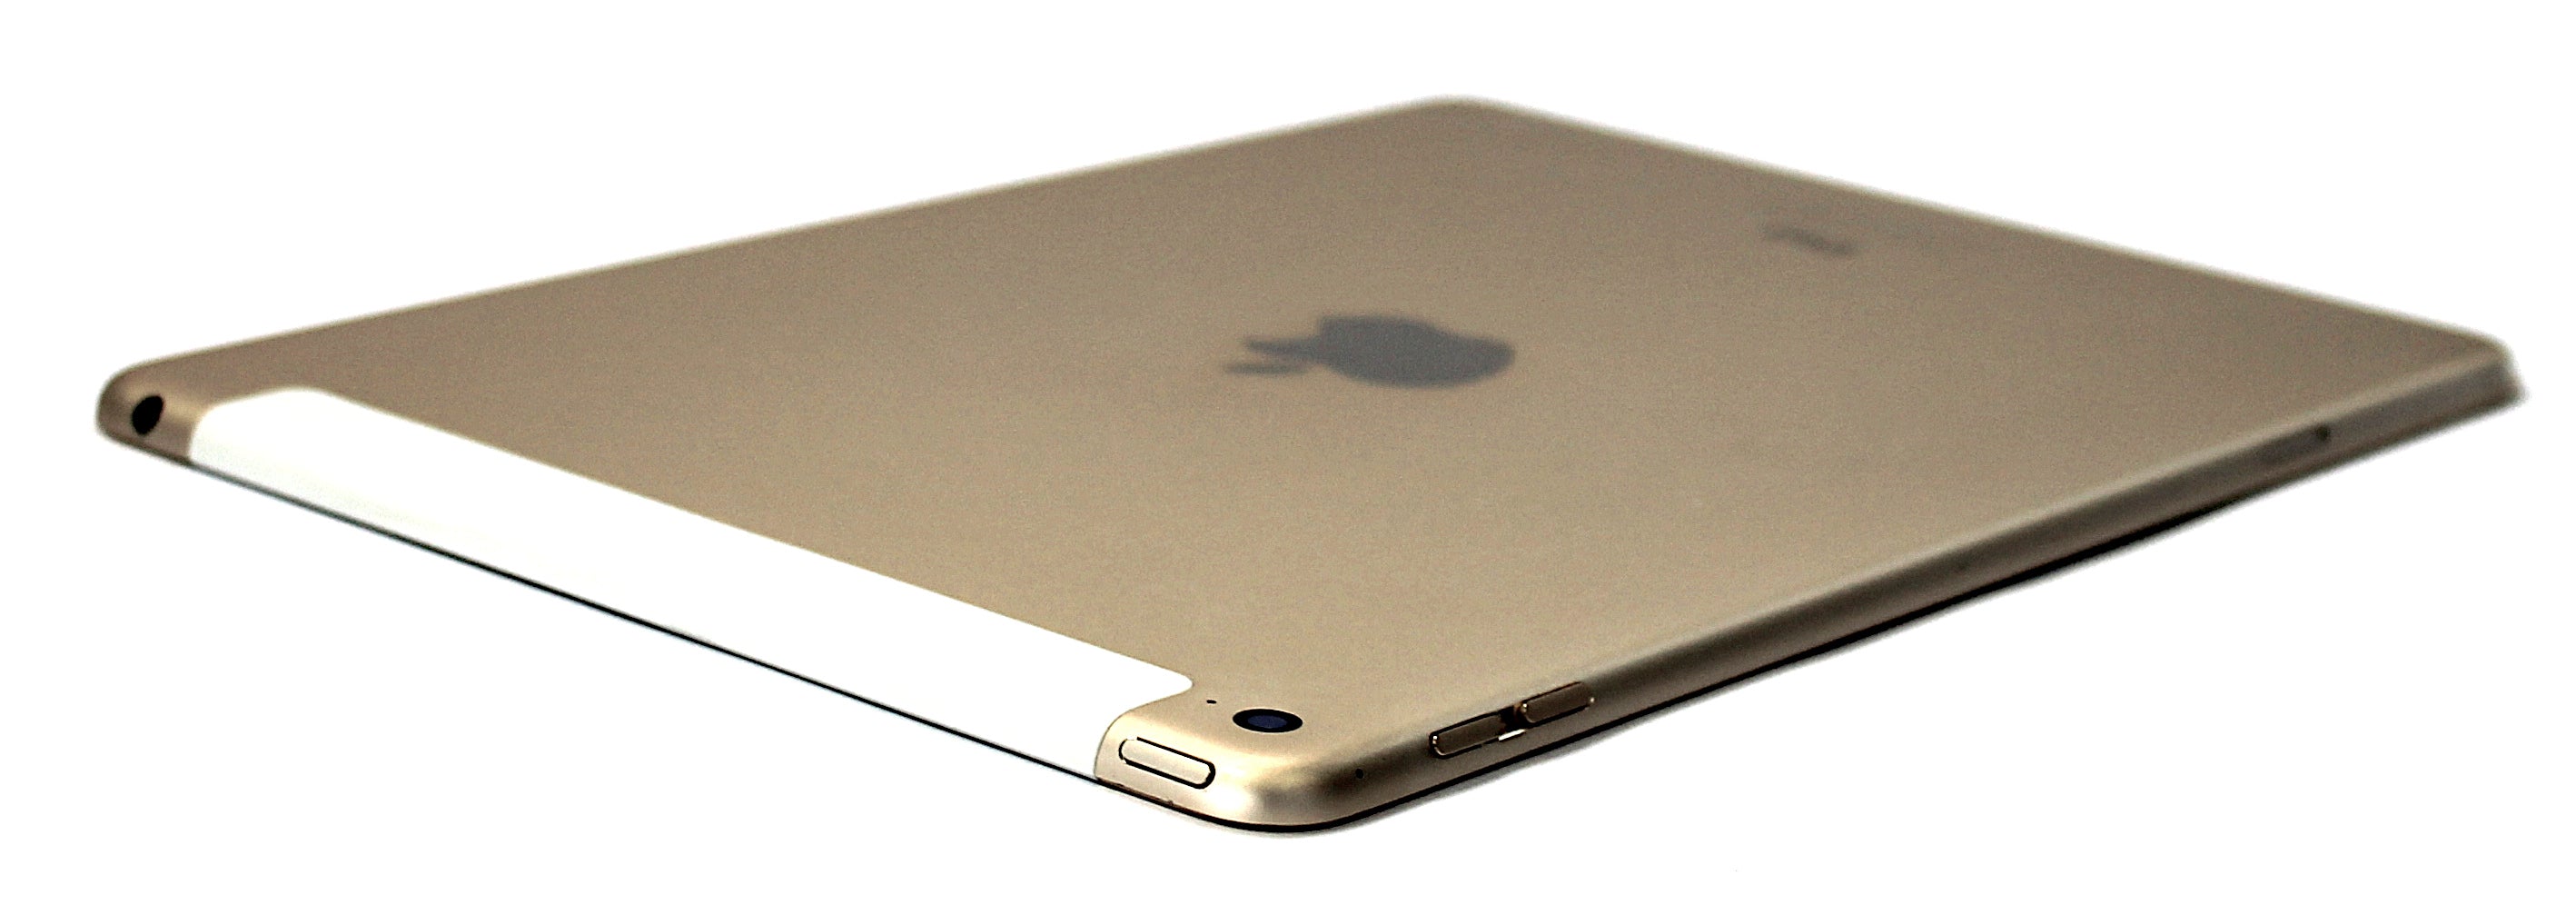 Apple iPad Air 2 Tablet, 16GB, WiFi + GSM, Gold, A1567